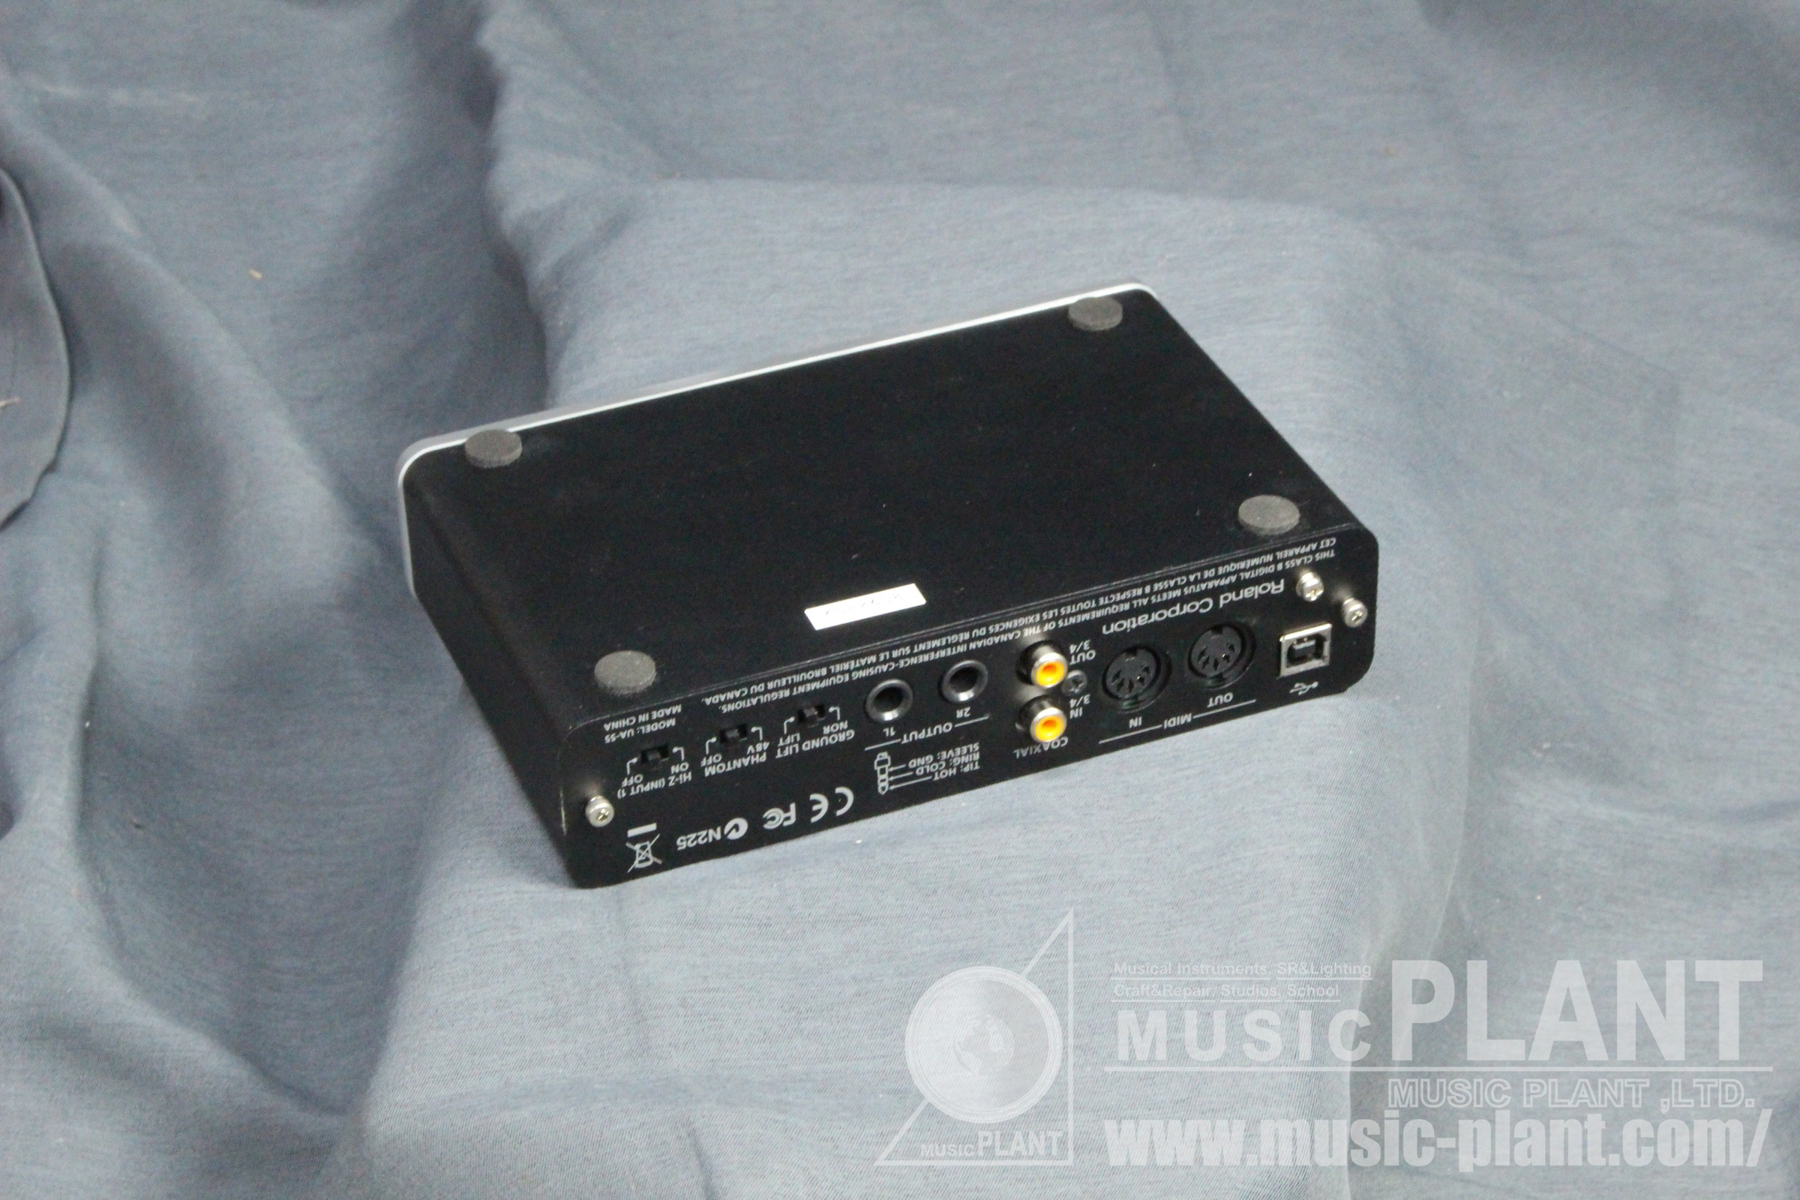 Roland USB MIDI オーディオ・インターフェースQUAD-CAPTURE UA-55中古品()売却済みです。あしからずご了承